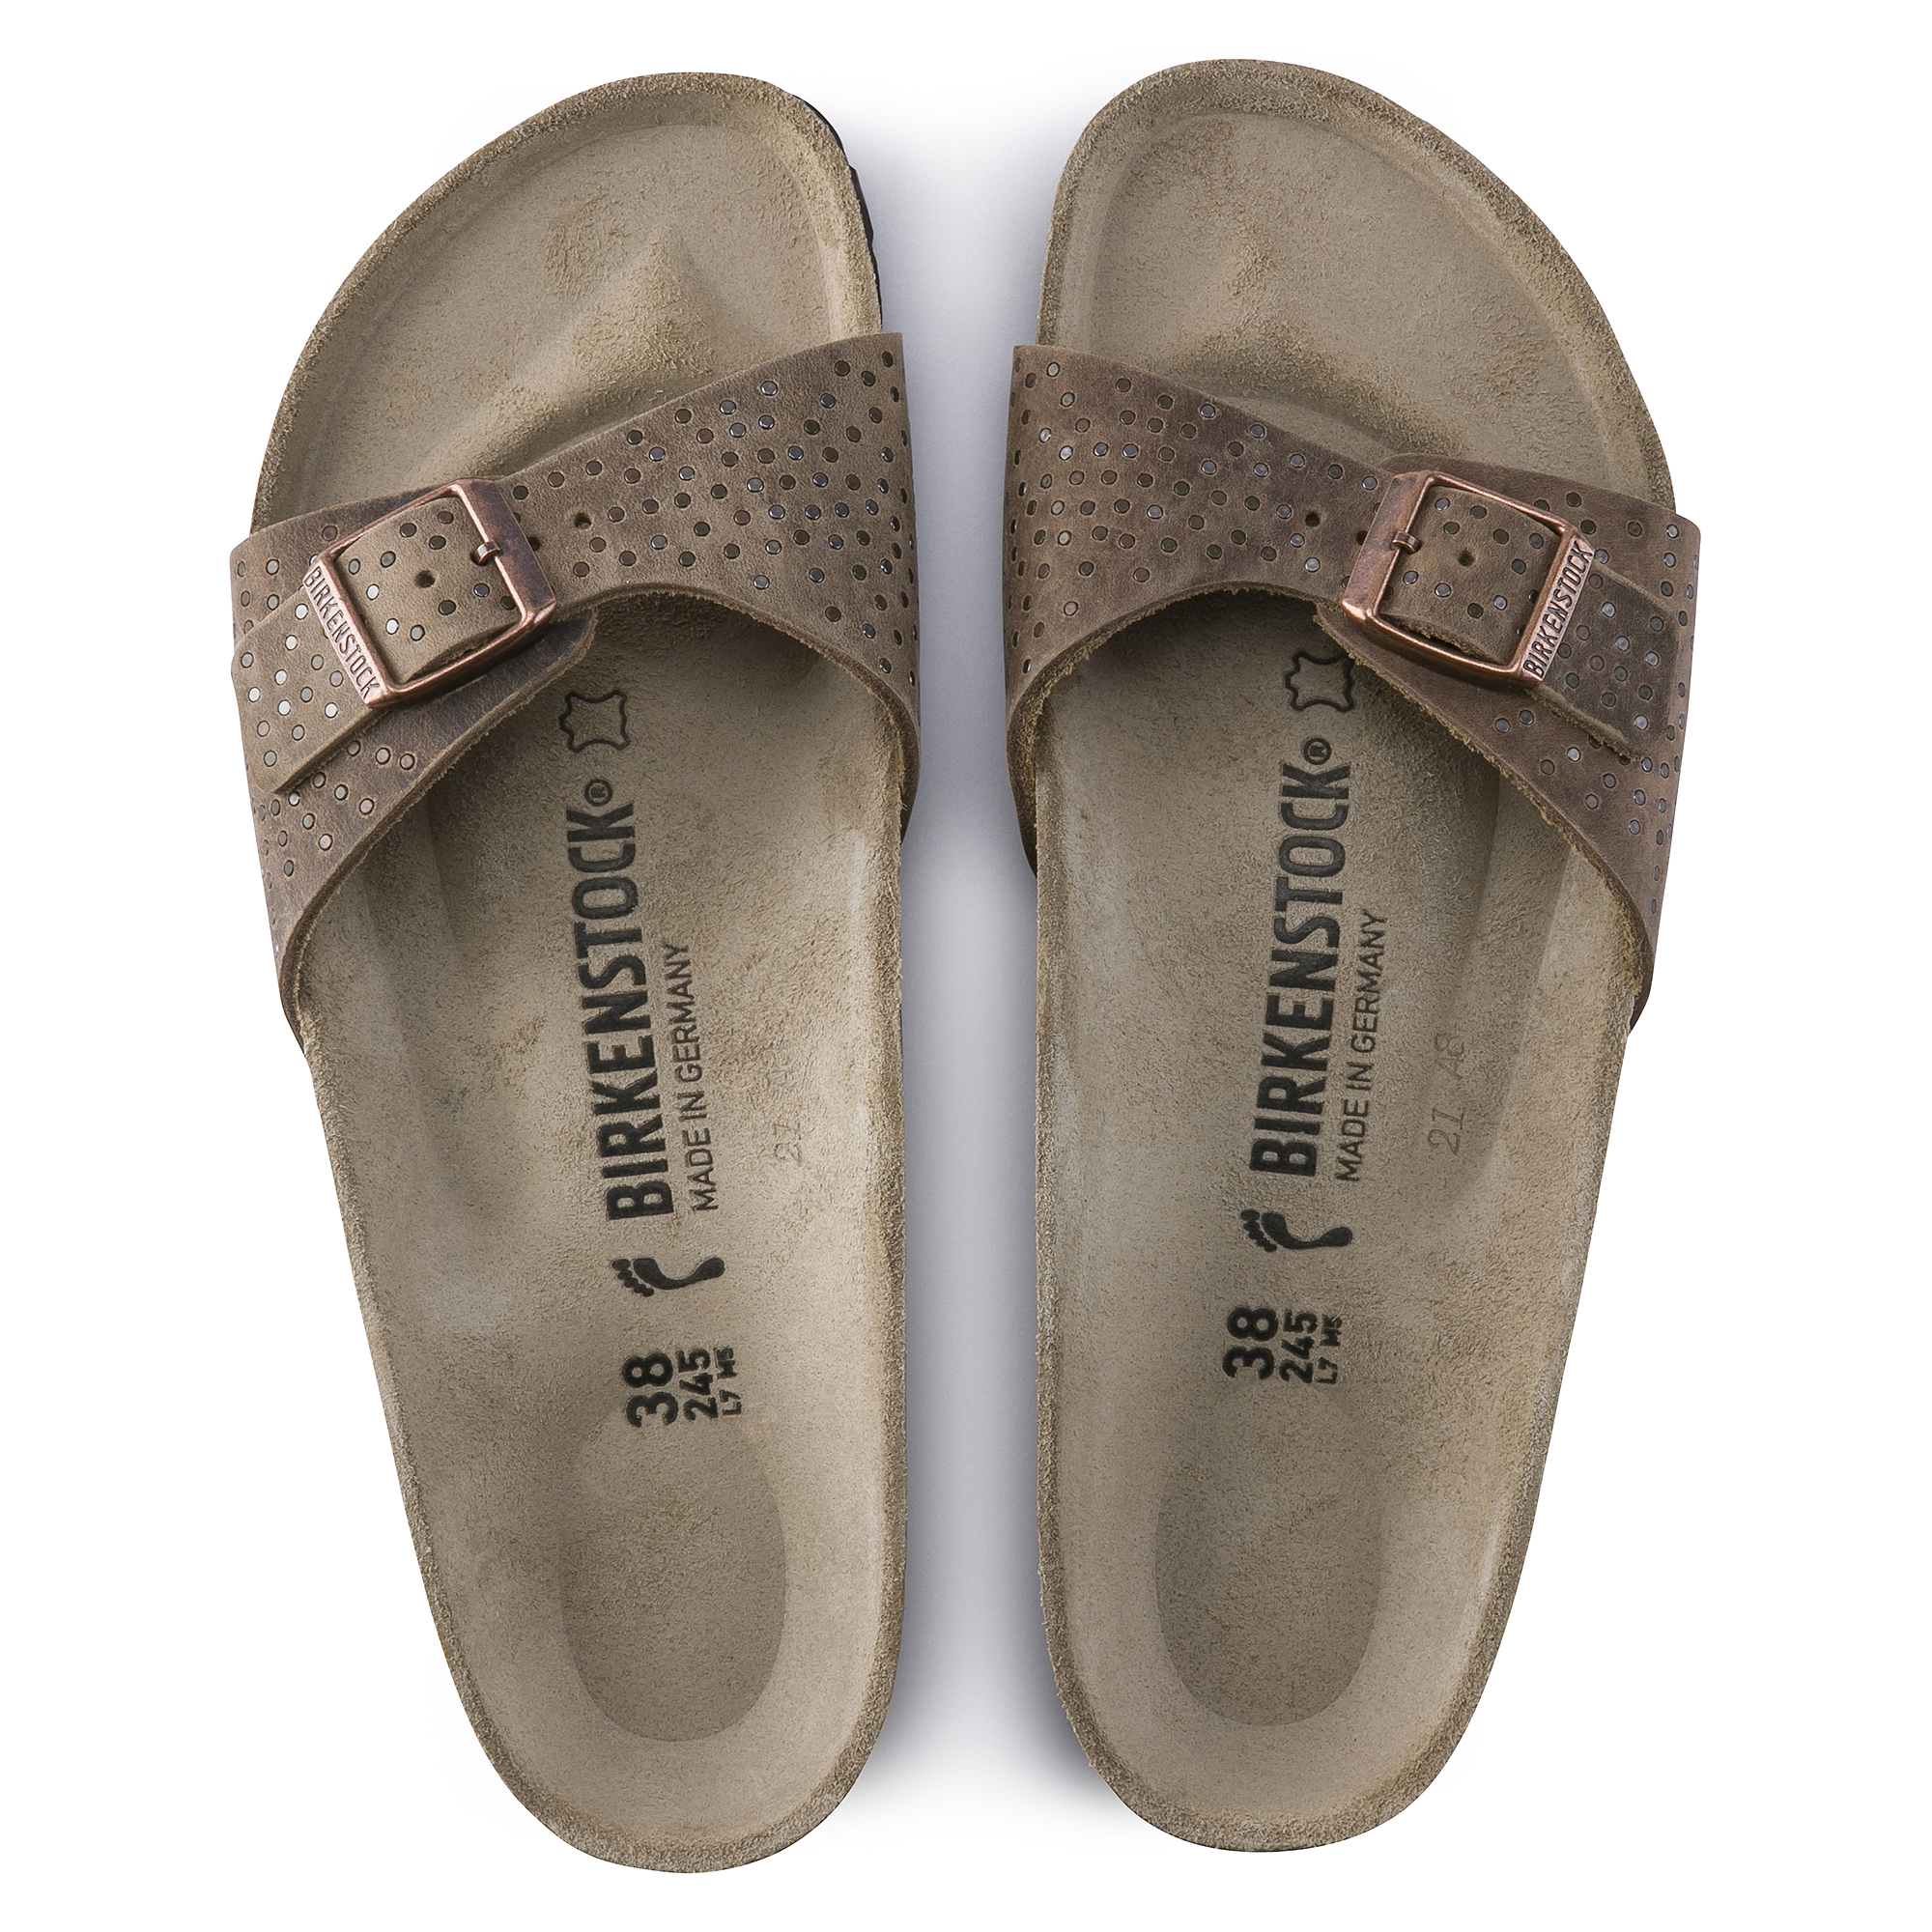 birkenstock madrid oiled leather sandals